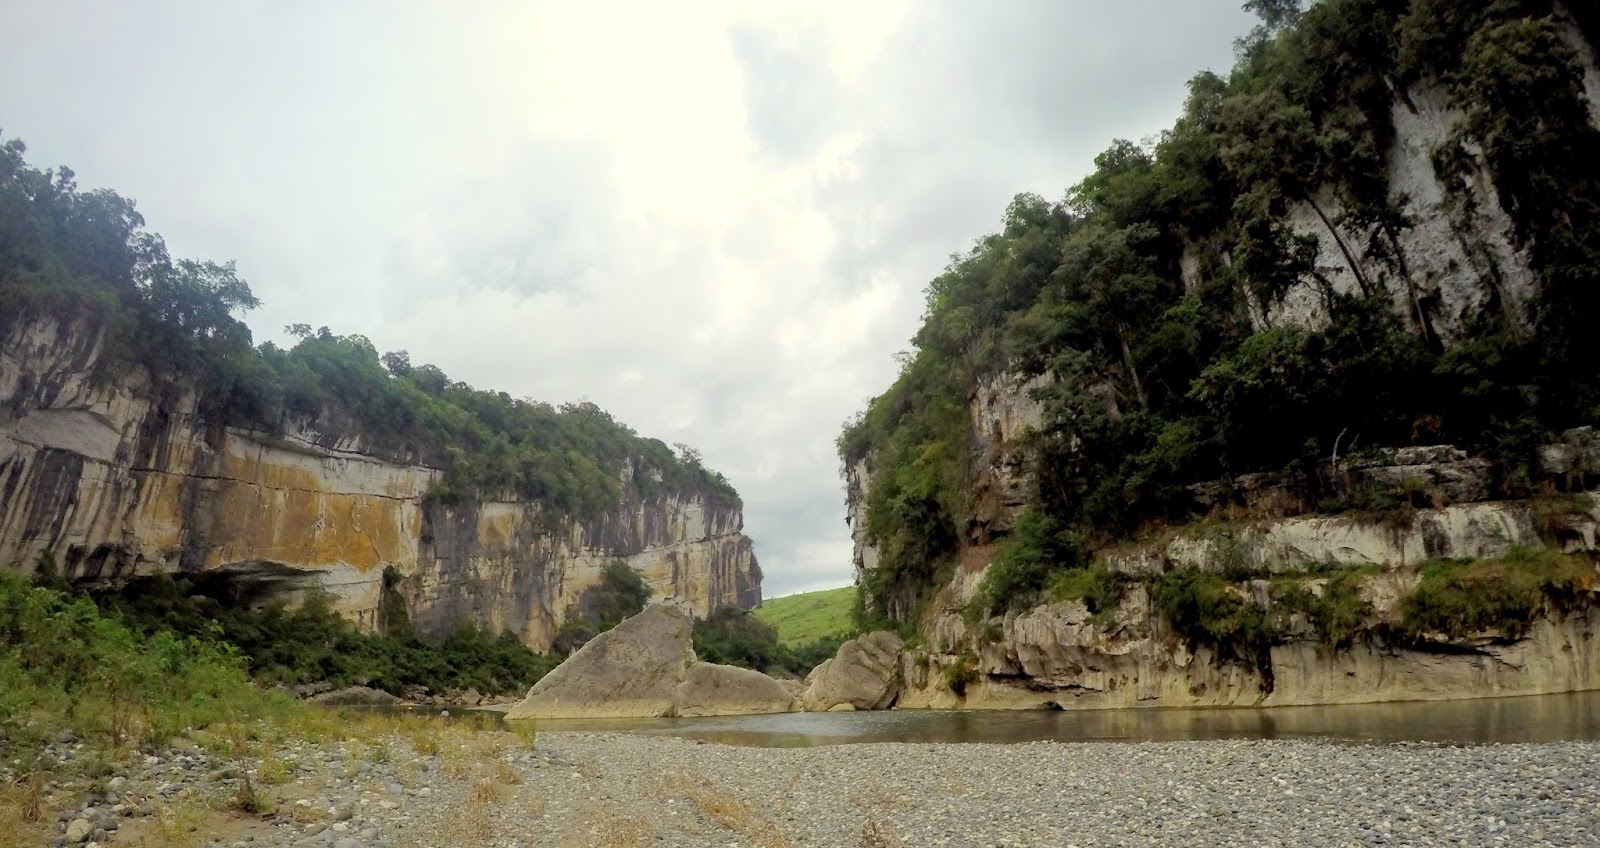 Canyon Feel of the Rock Formation, Siitan River, Nagtipunan Quirino